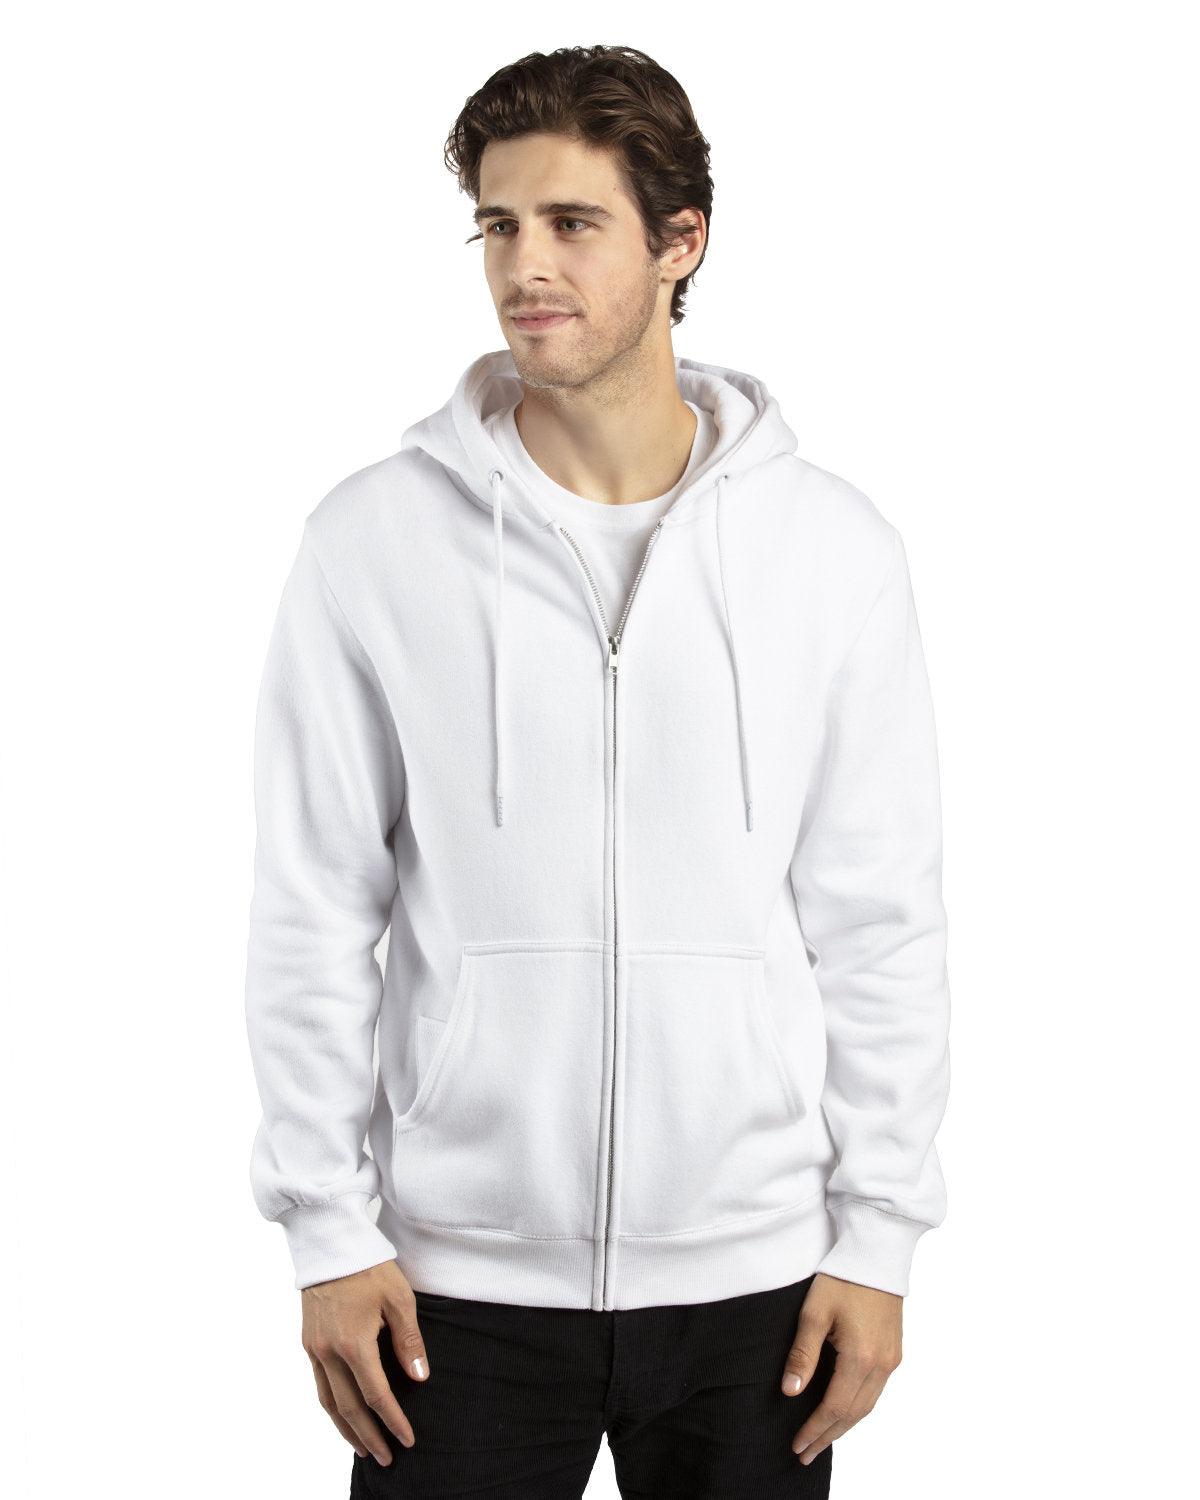 Unisex Ultimate Fleece Full-Zip Hooded Sweatshirt - Apparel Globe